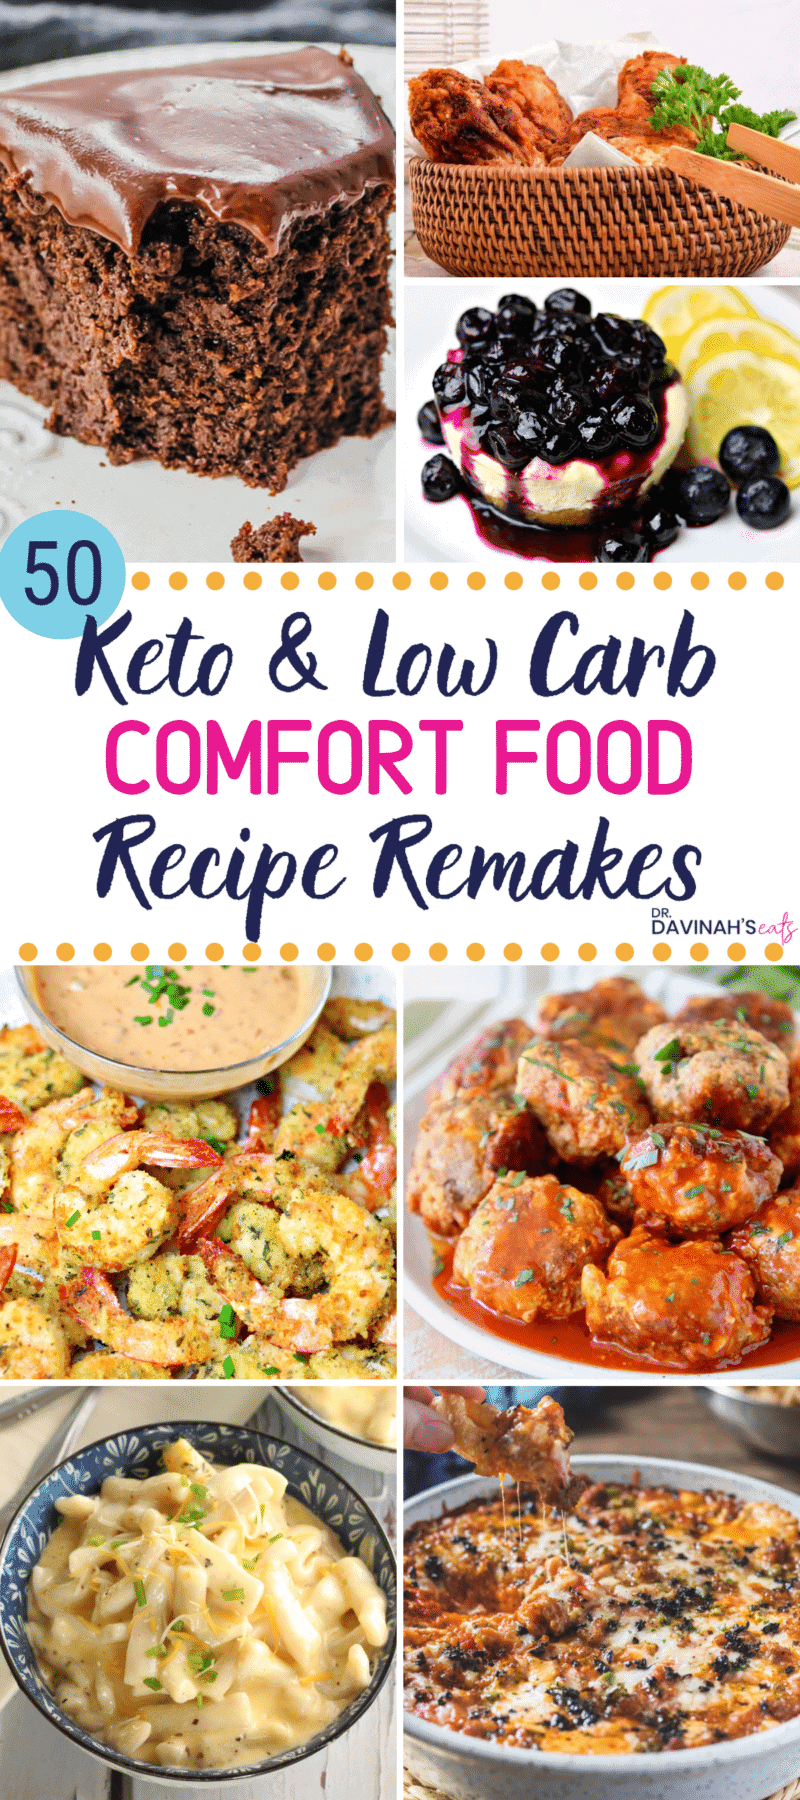 50 Keto Versions of Your Favorite Comfort Foods | Dr. Davinah's Eats